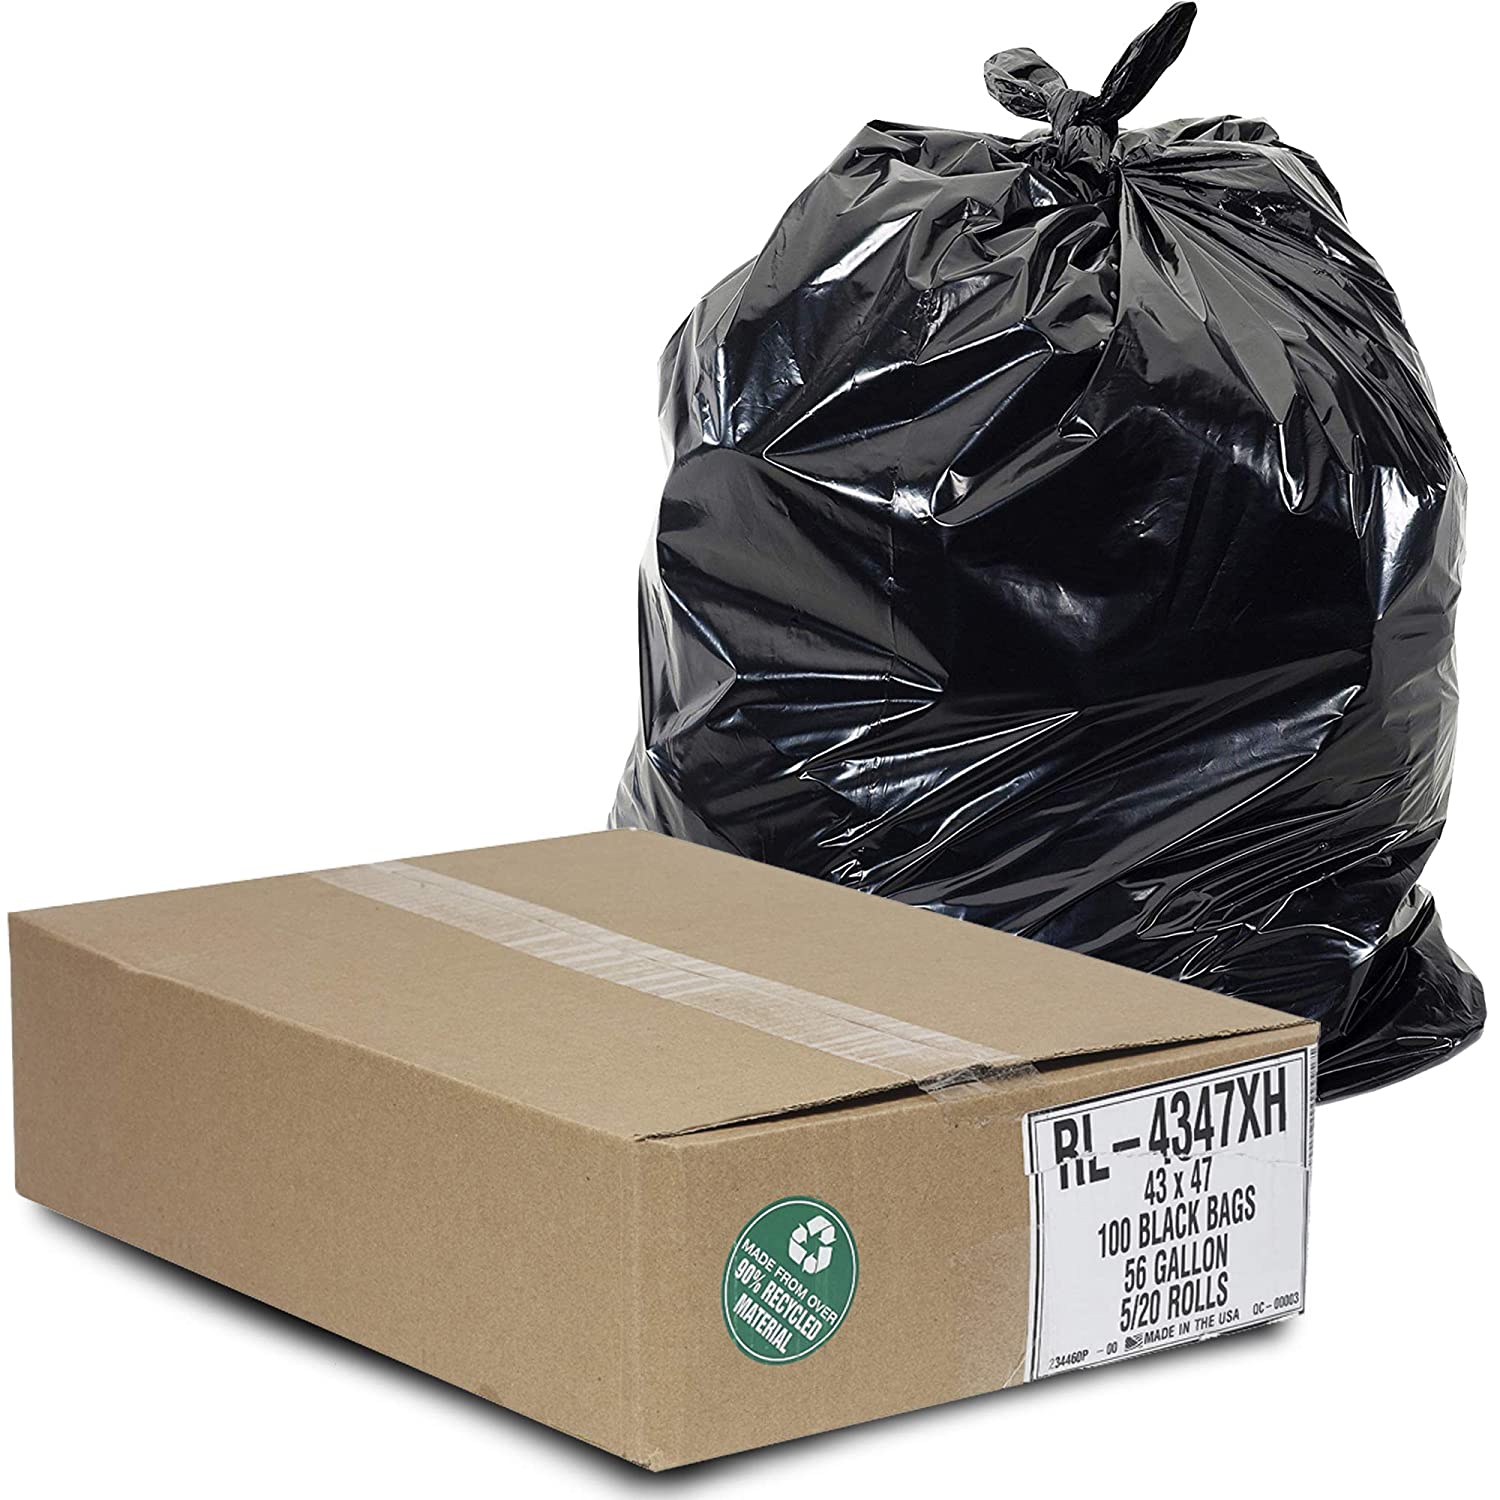 Clear Aluf Plastics HCR-434816C High Density Star Sealed Coreless Roll Bags 43 x 48 56 gal Pack of 200 Polyethylene 